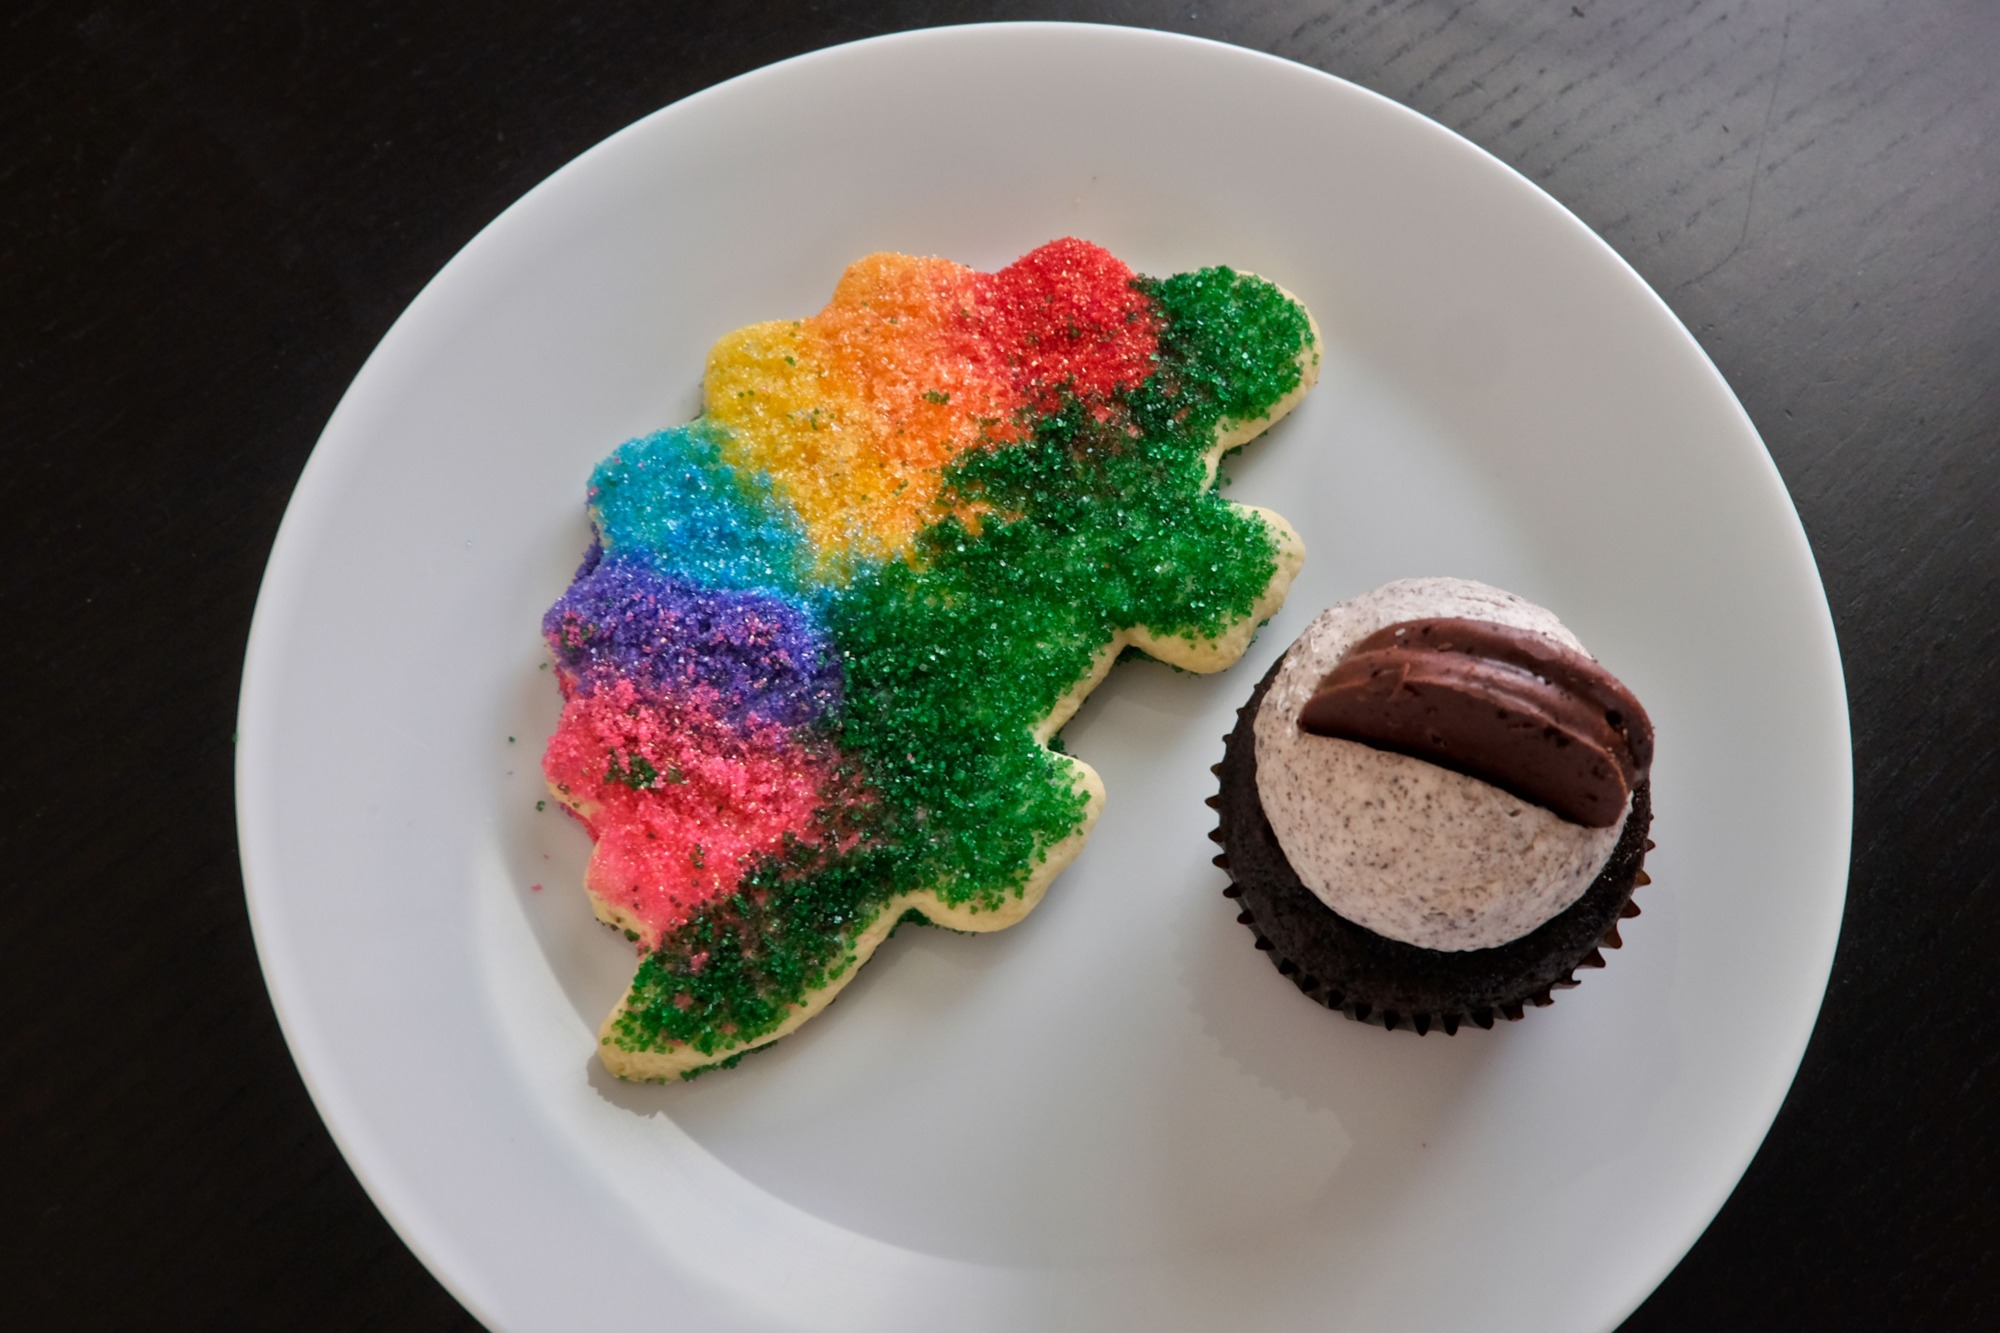 A dinosaur cookie and Oreo cupcake